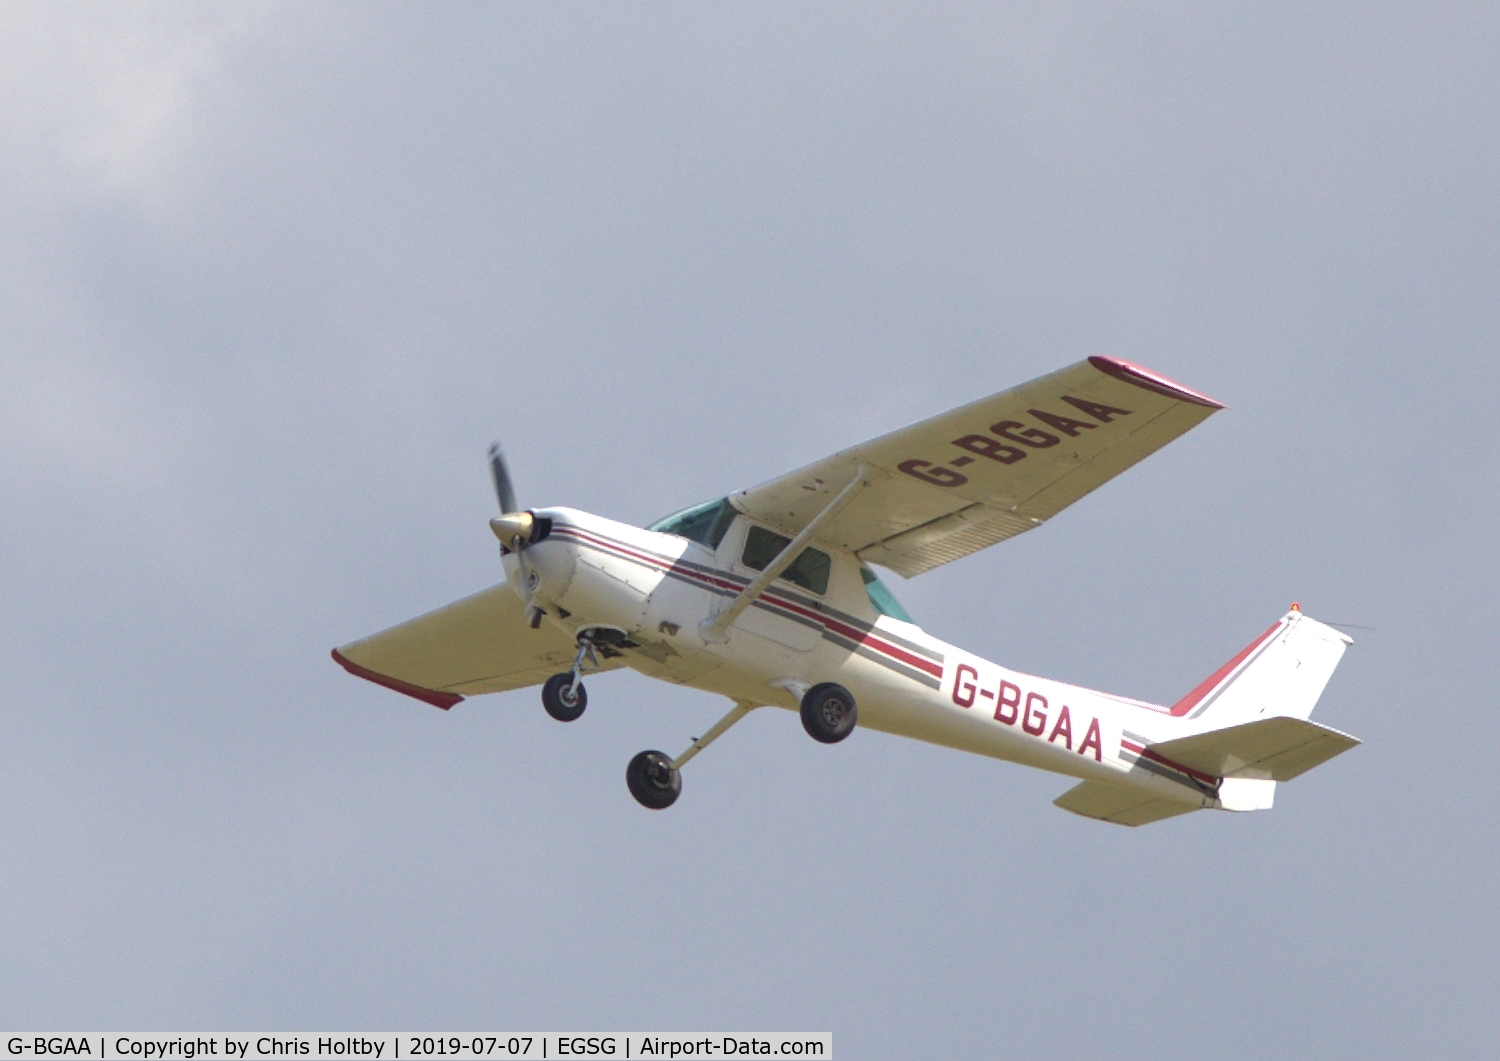 G-BGAA, 1978 Cessna 152 C/N 152-81894, Departing Stapleford Tawney, Essex